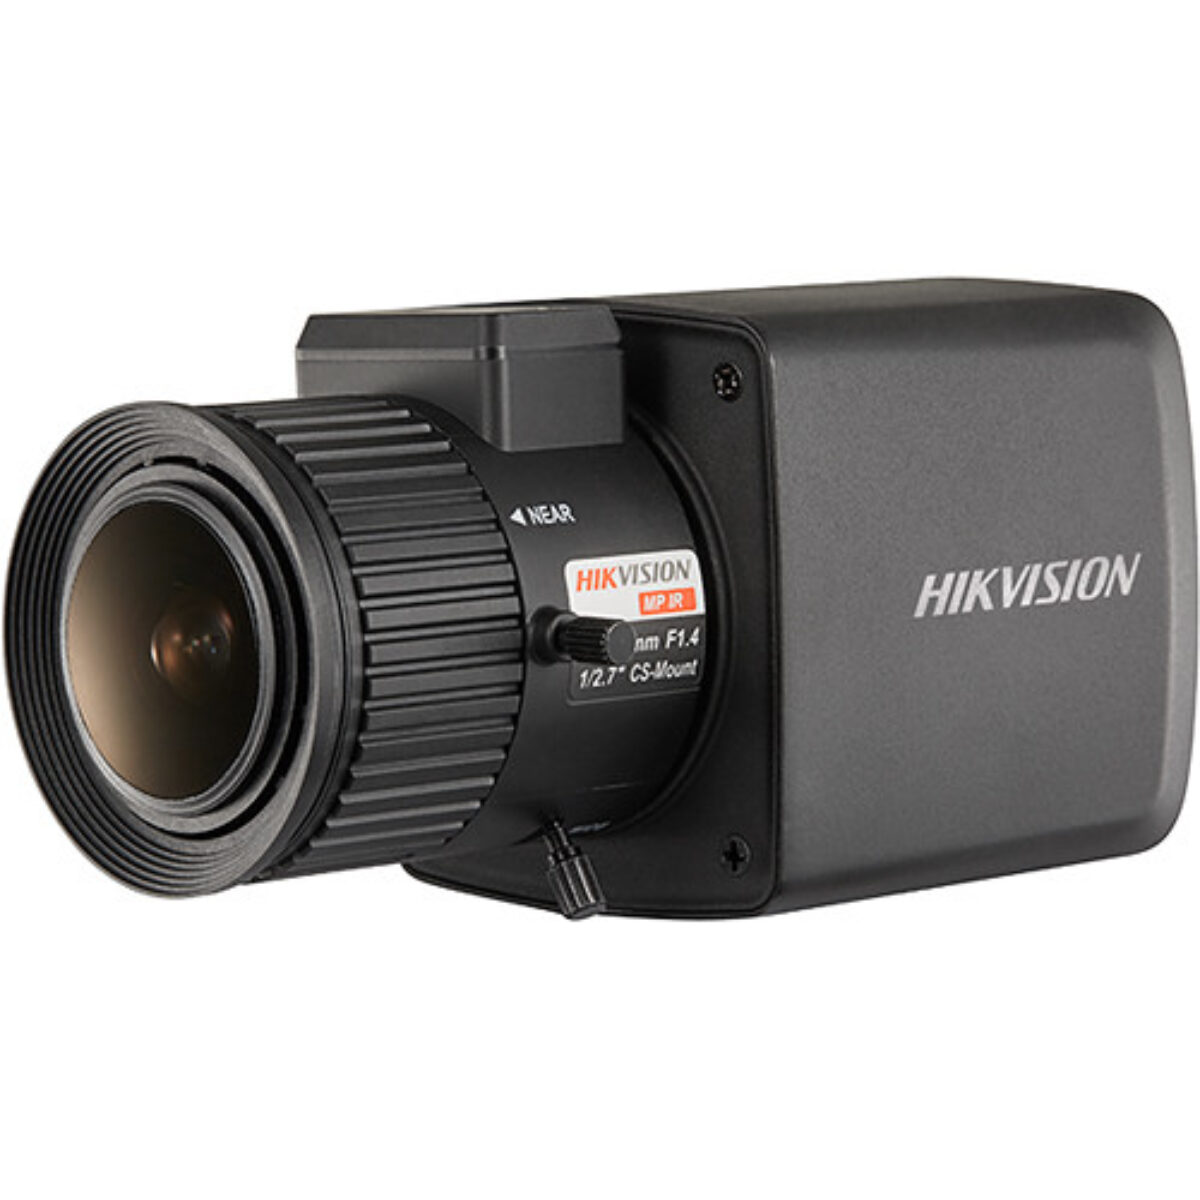 Hikvision 2 MP Ultra Low Light Box Camera – DS-2CC12D8T-AMM